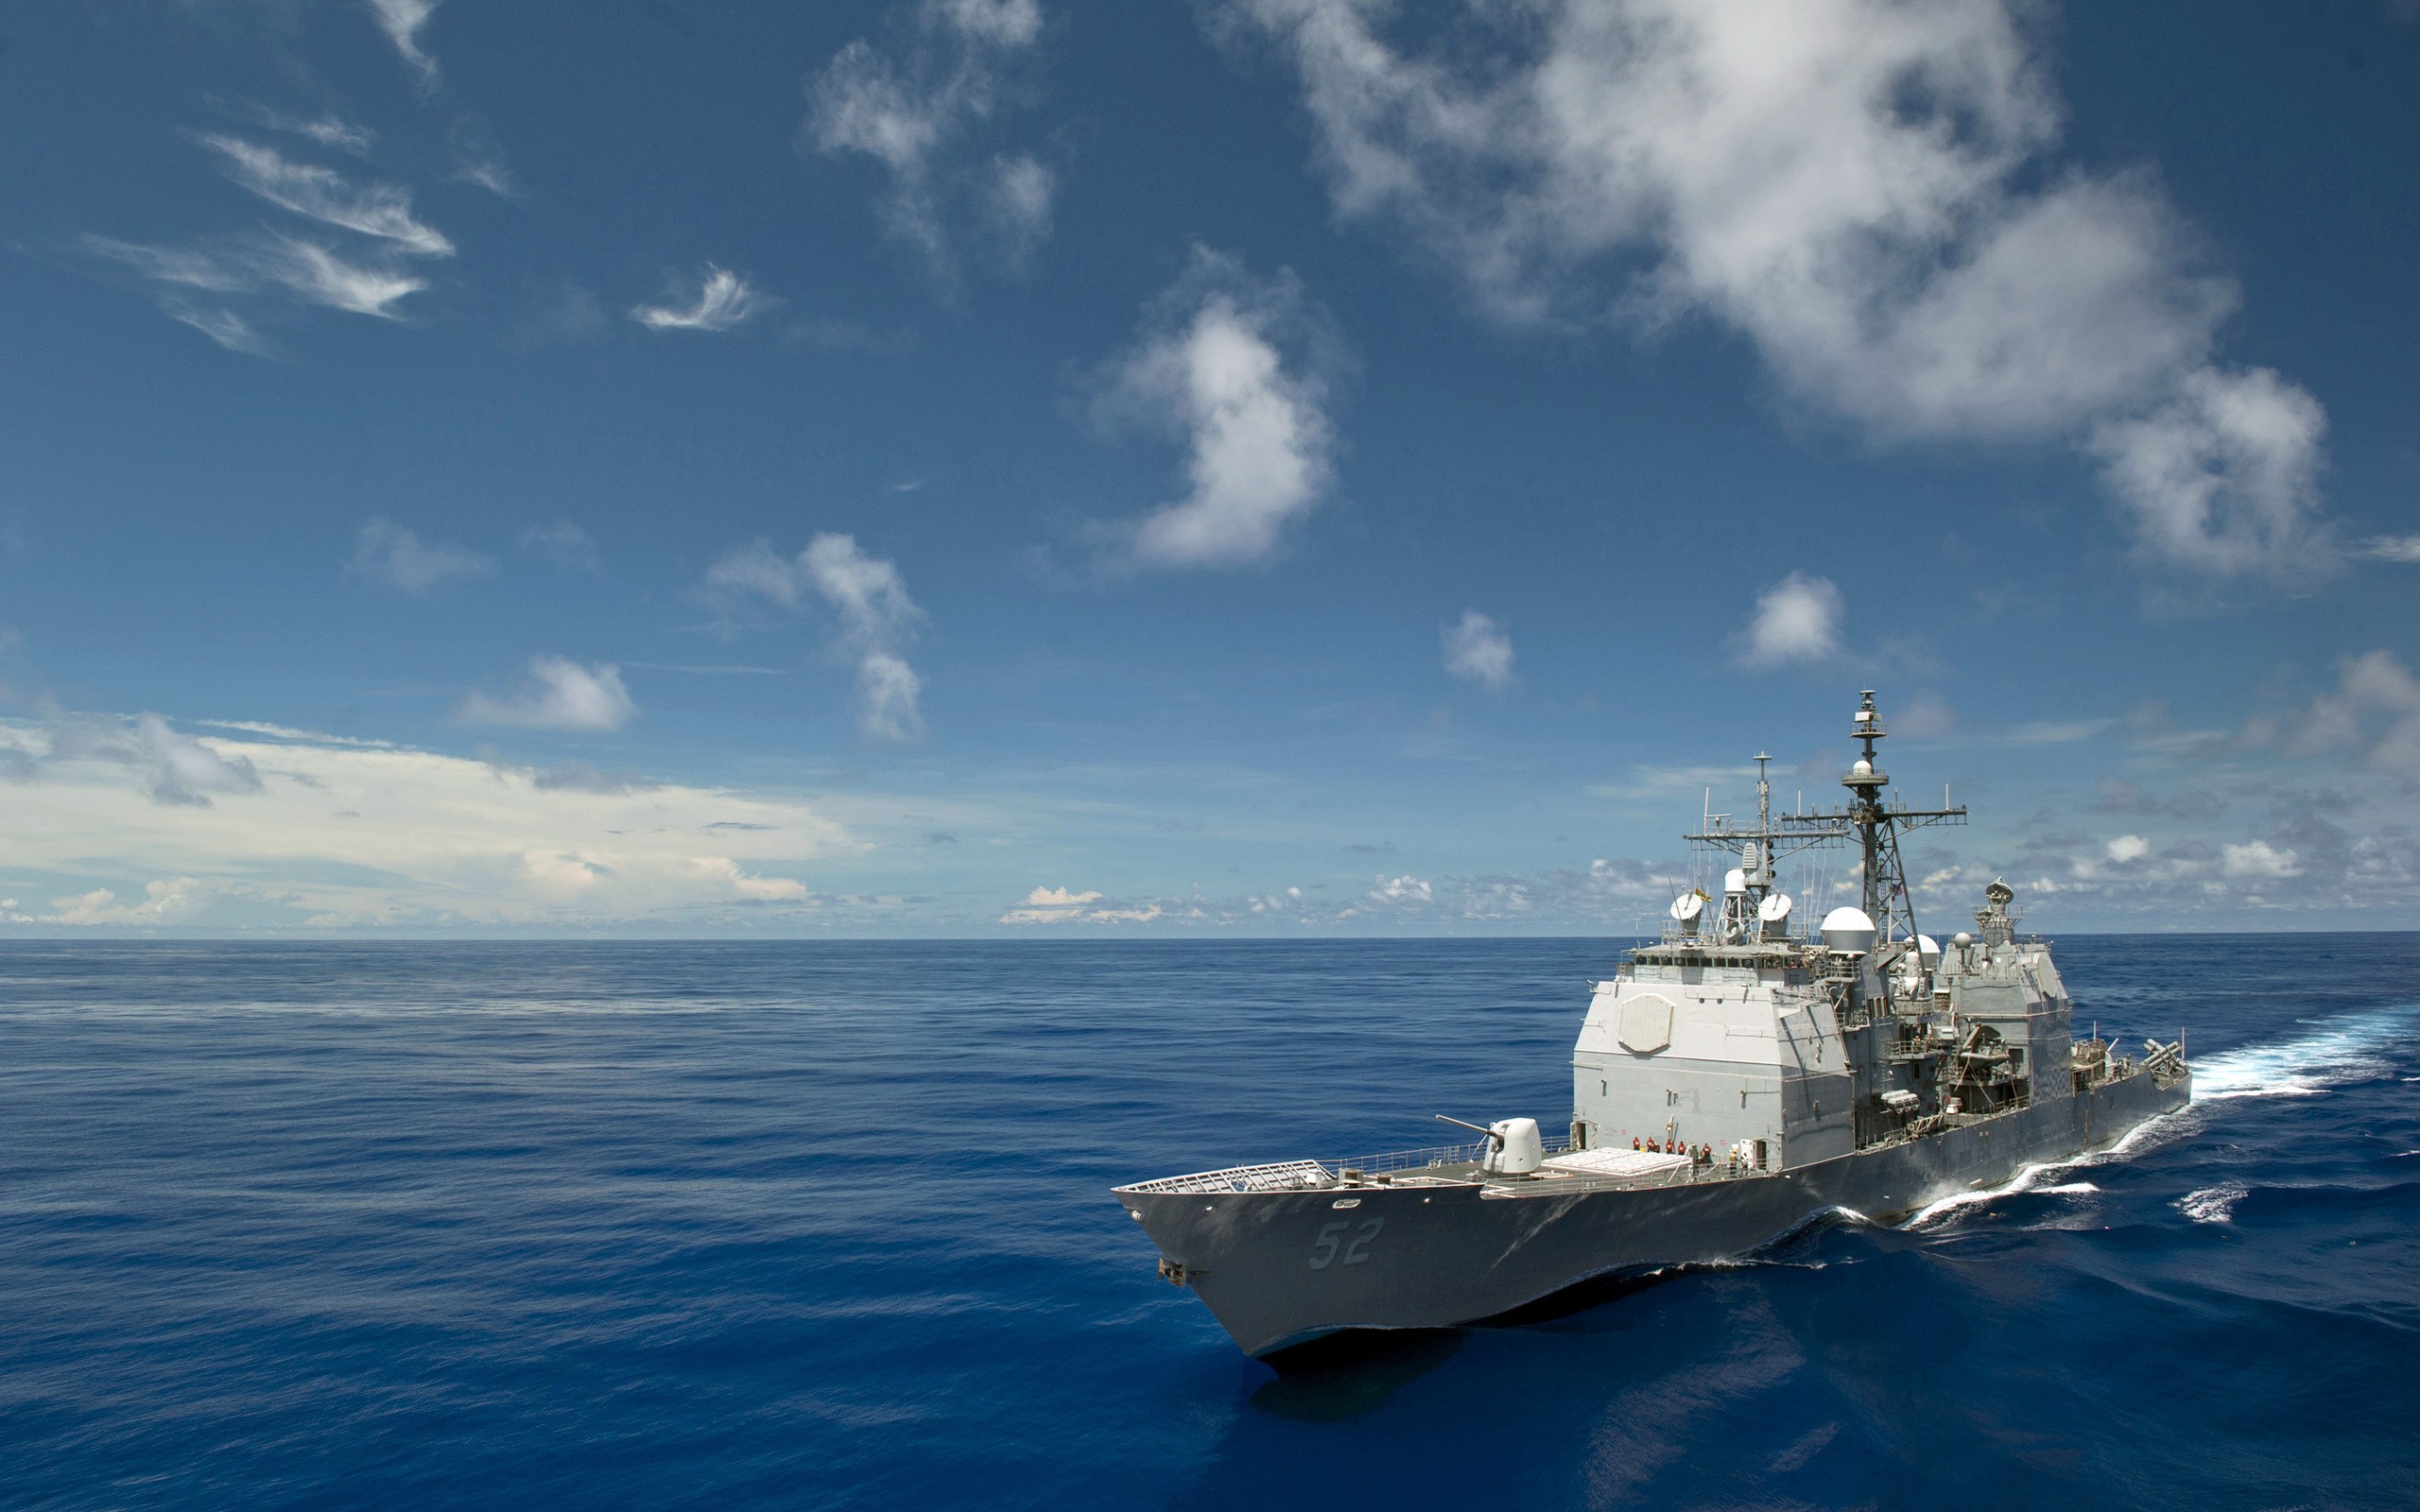 General 2560x1600 navy ship vehicle military military vehicle warship